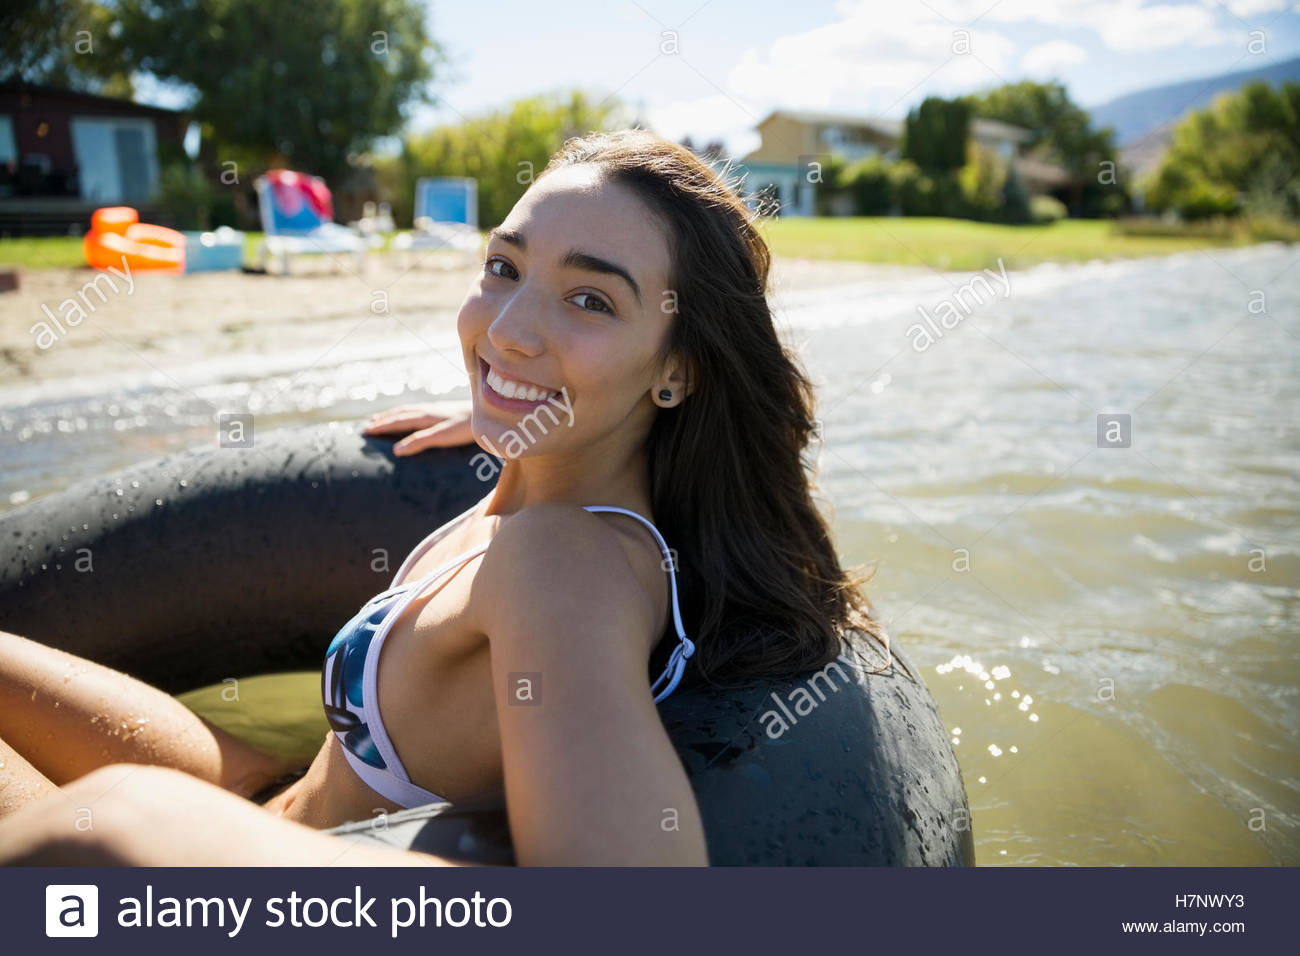 Teenage girl in bikini posing hi-res stock photography and images - Alamy